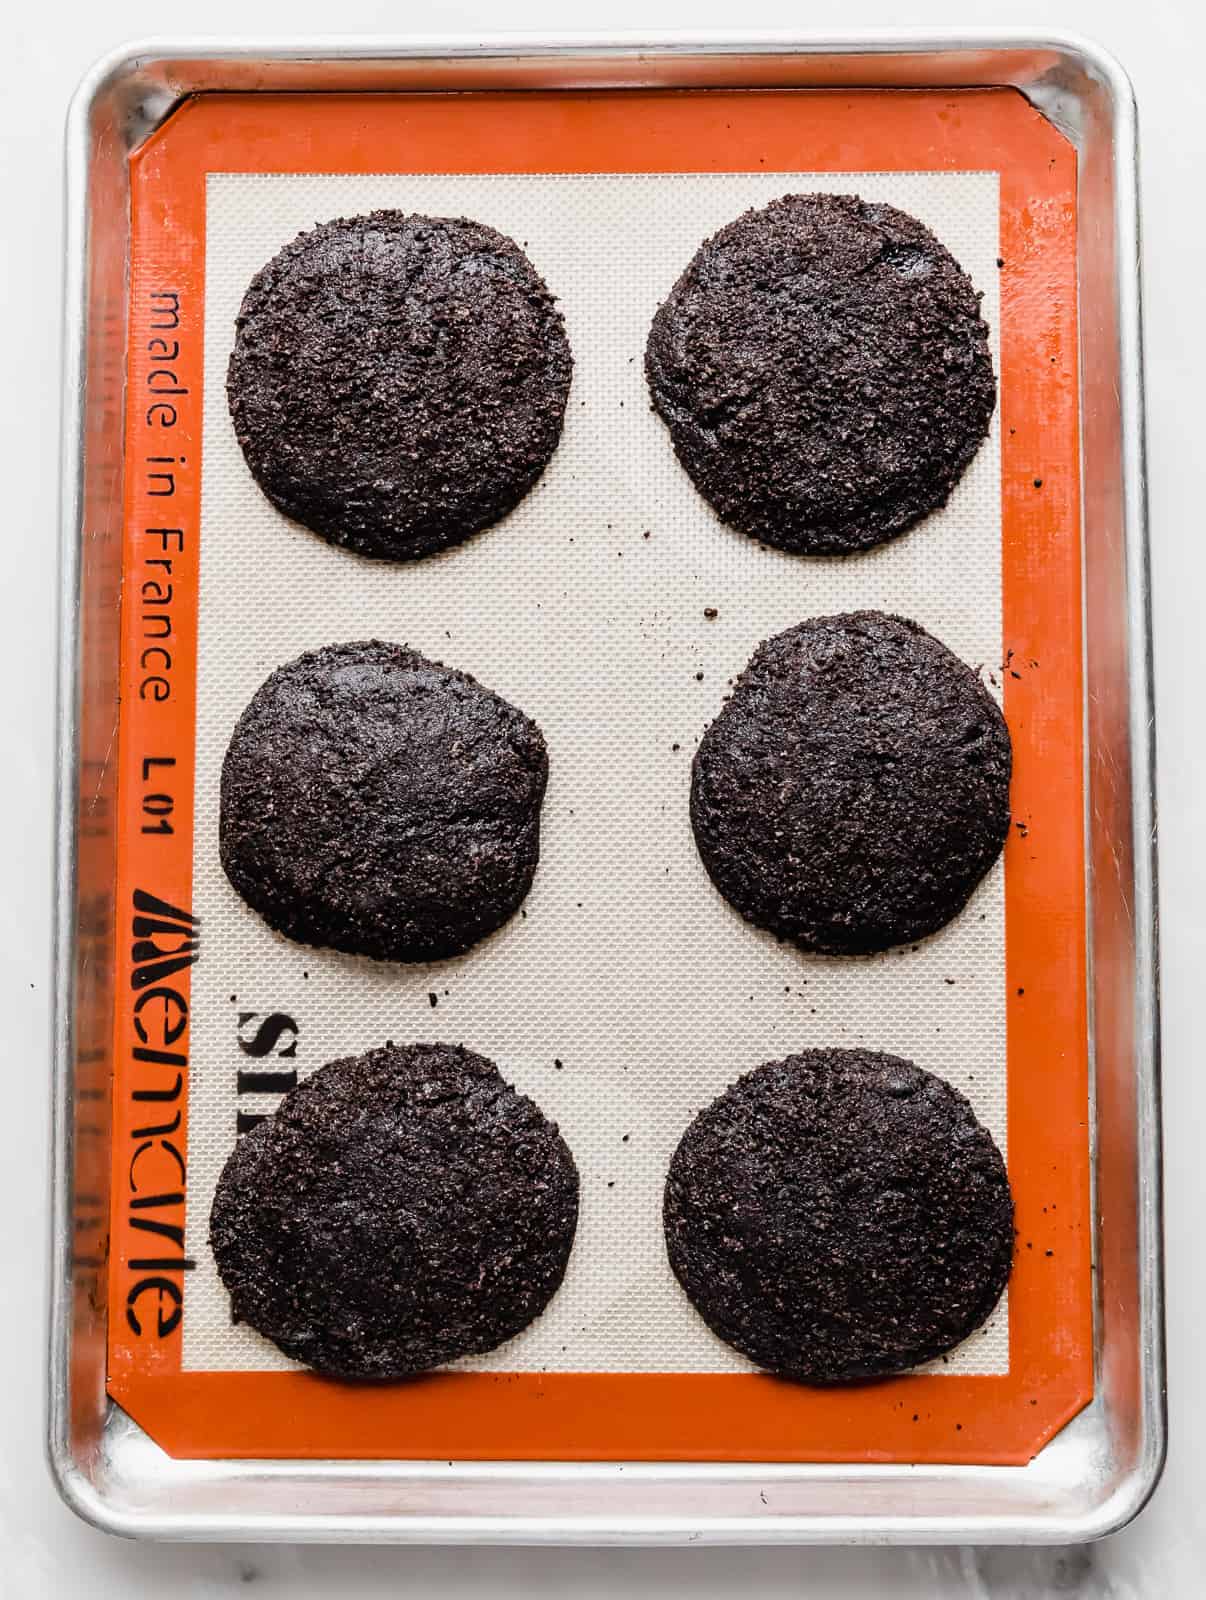 Six Crumbl Chocolate Oreo Cookies on a baking sheet.